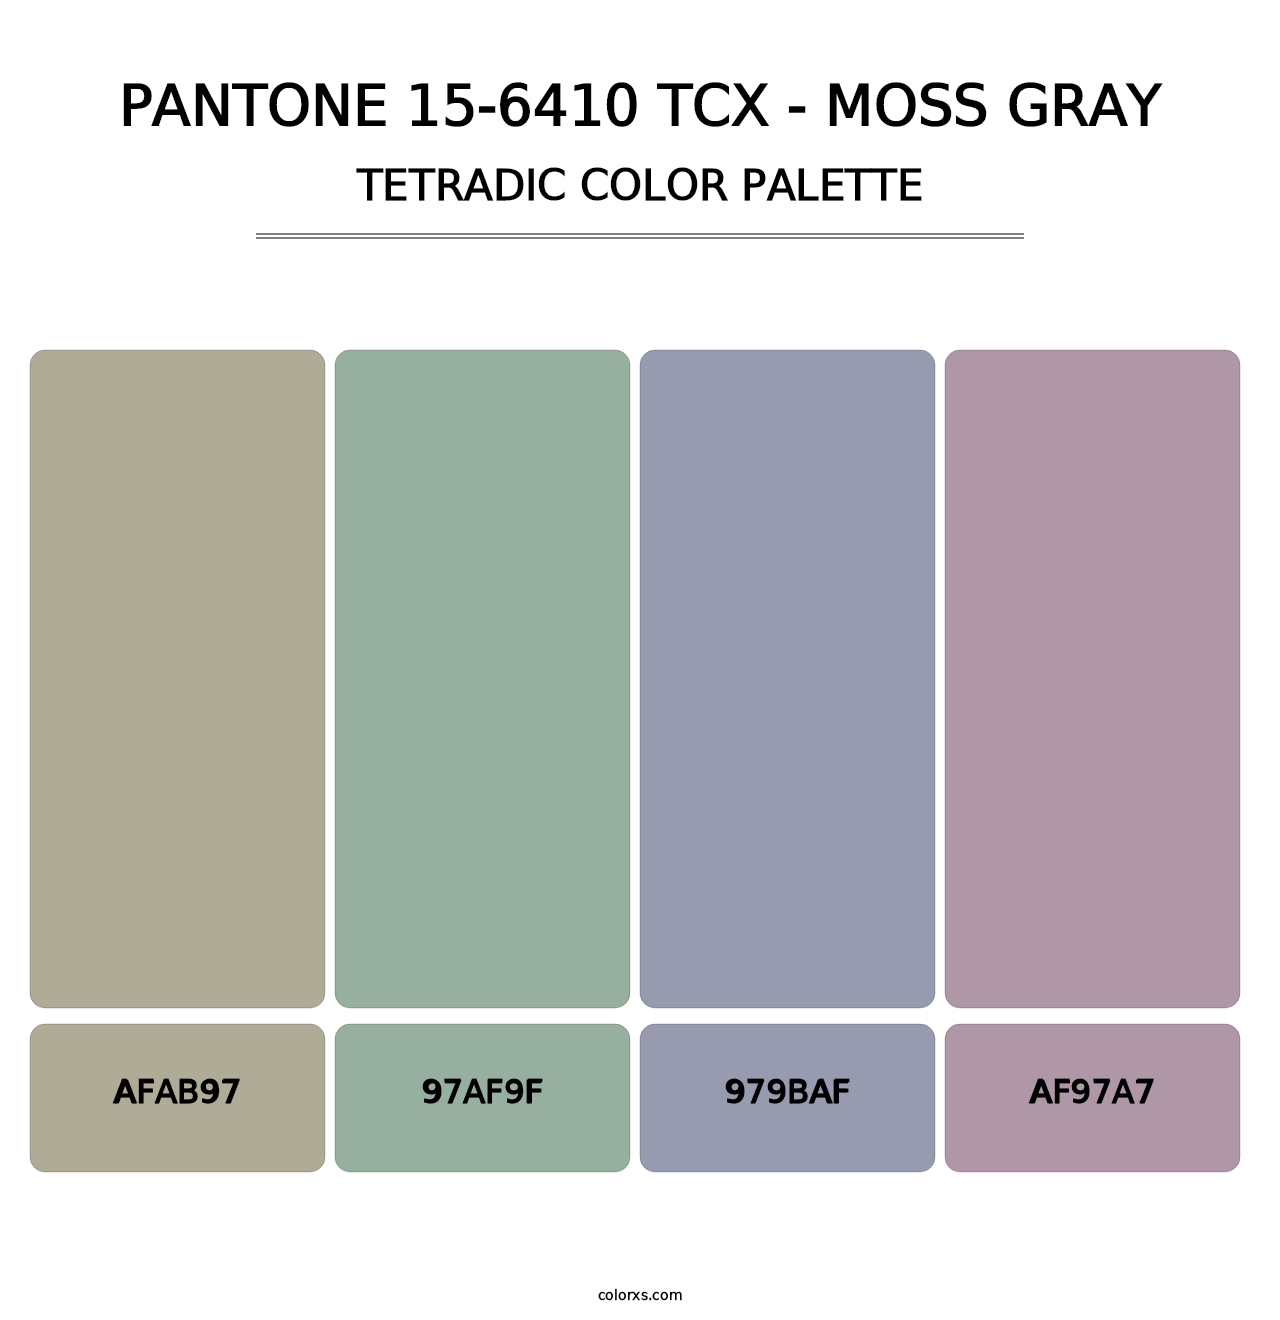 PANTONE 15-6410 TCX - Moss Gray - Tetradic Color Palette